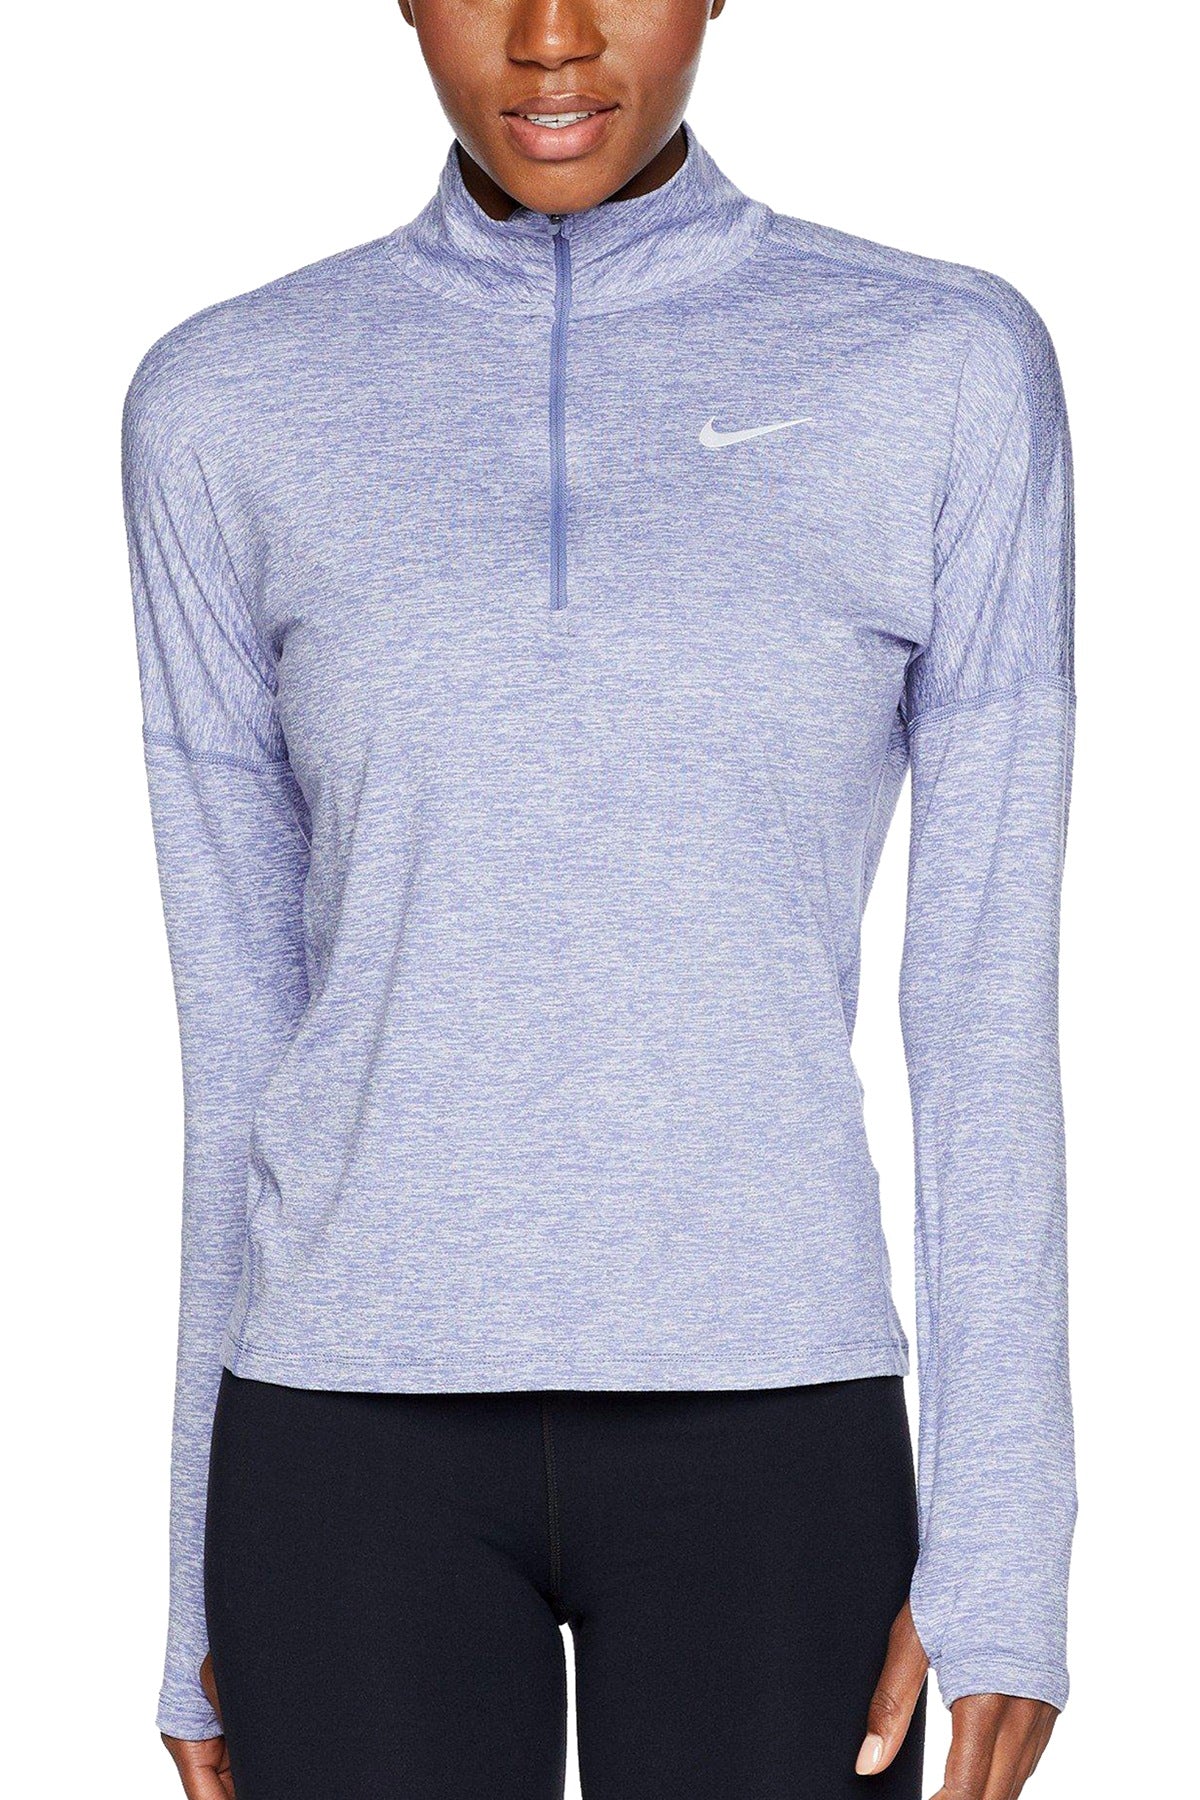 Nike Purple-Slate Heather Dry Element 1/2-Zip Running Top